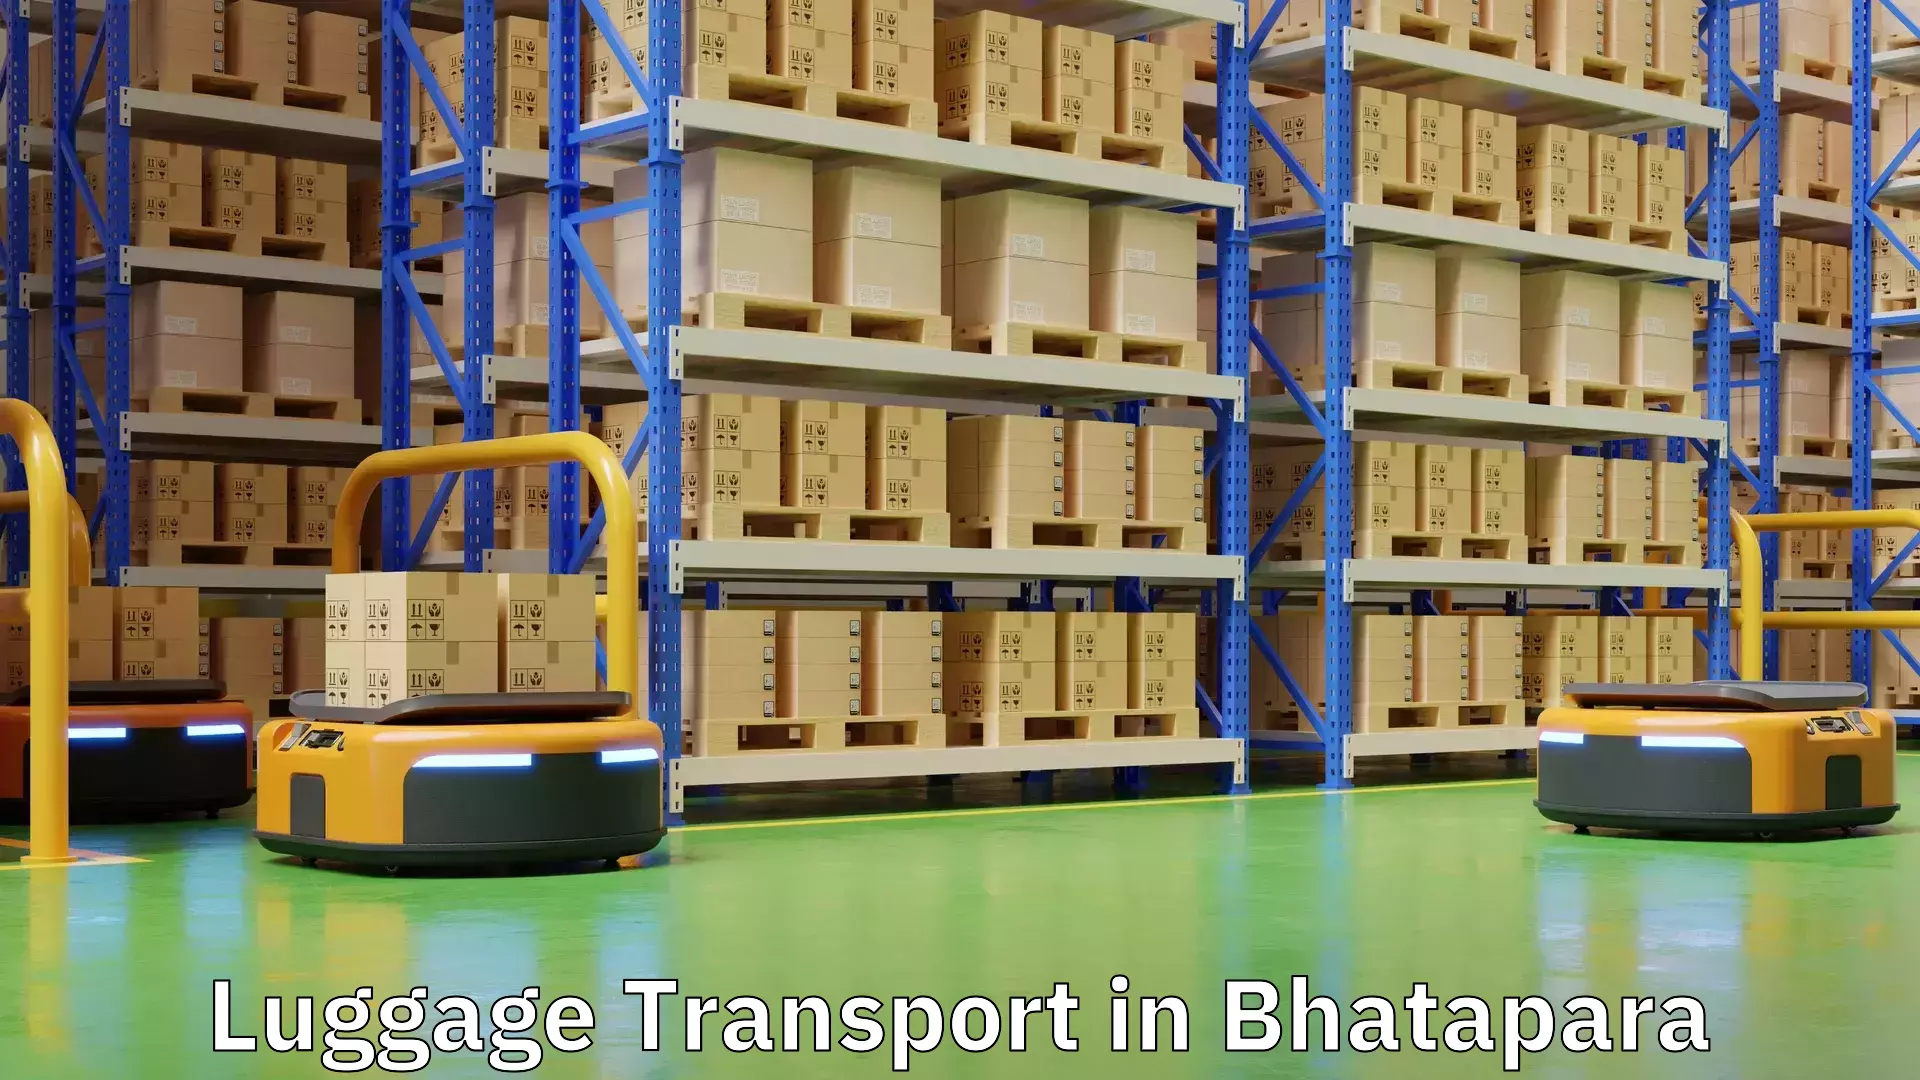 Baggage shipping service in Bhatapara